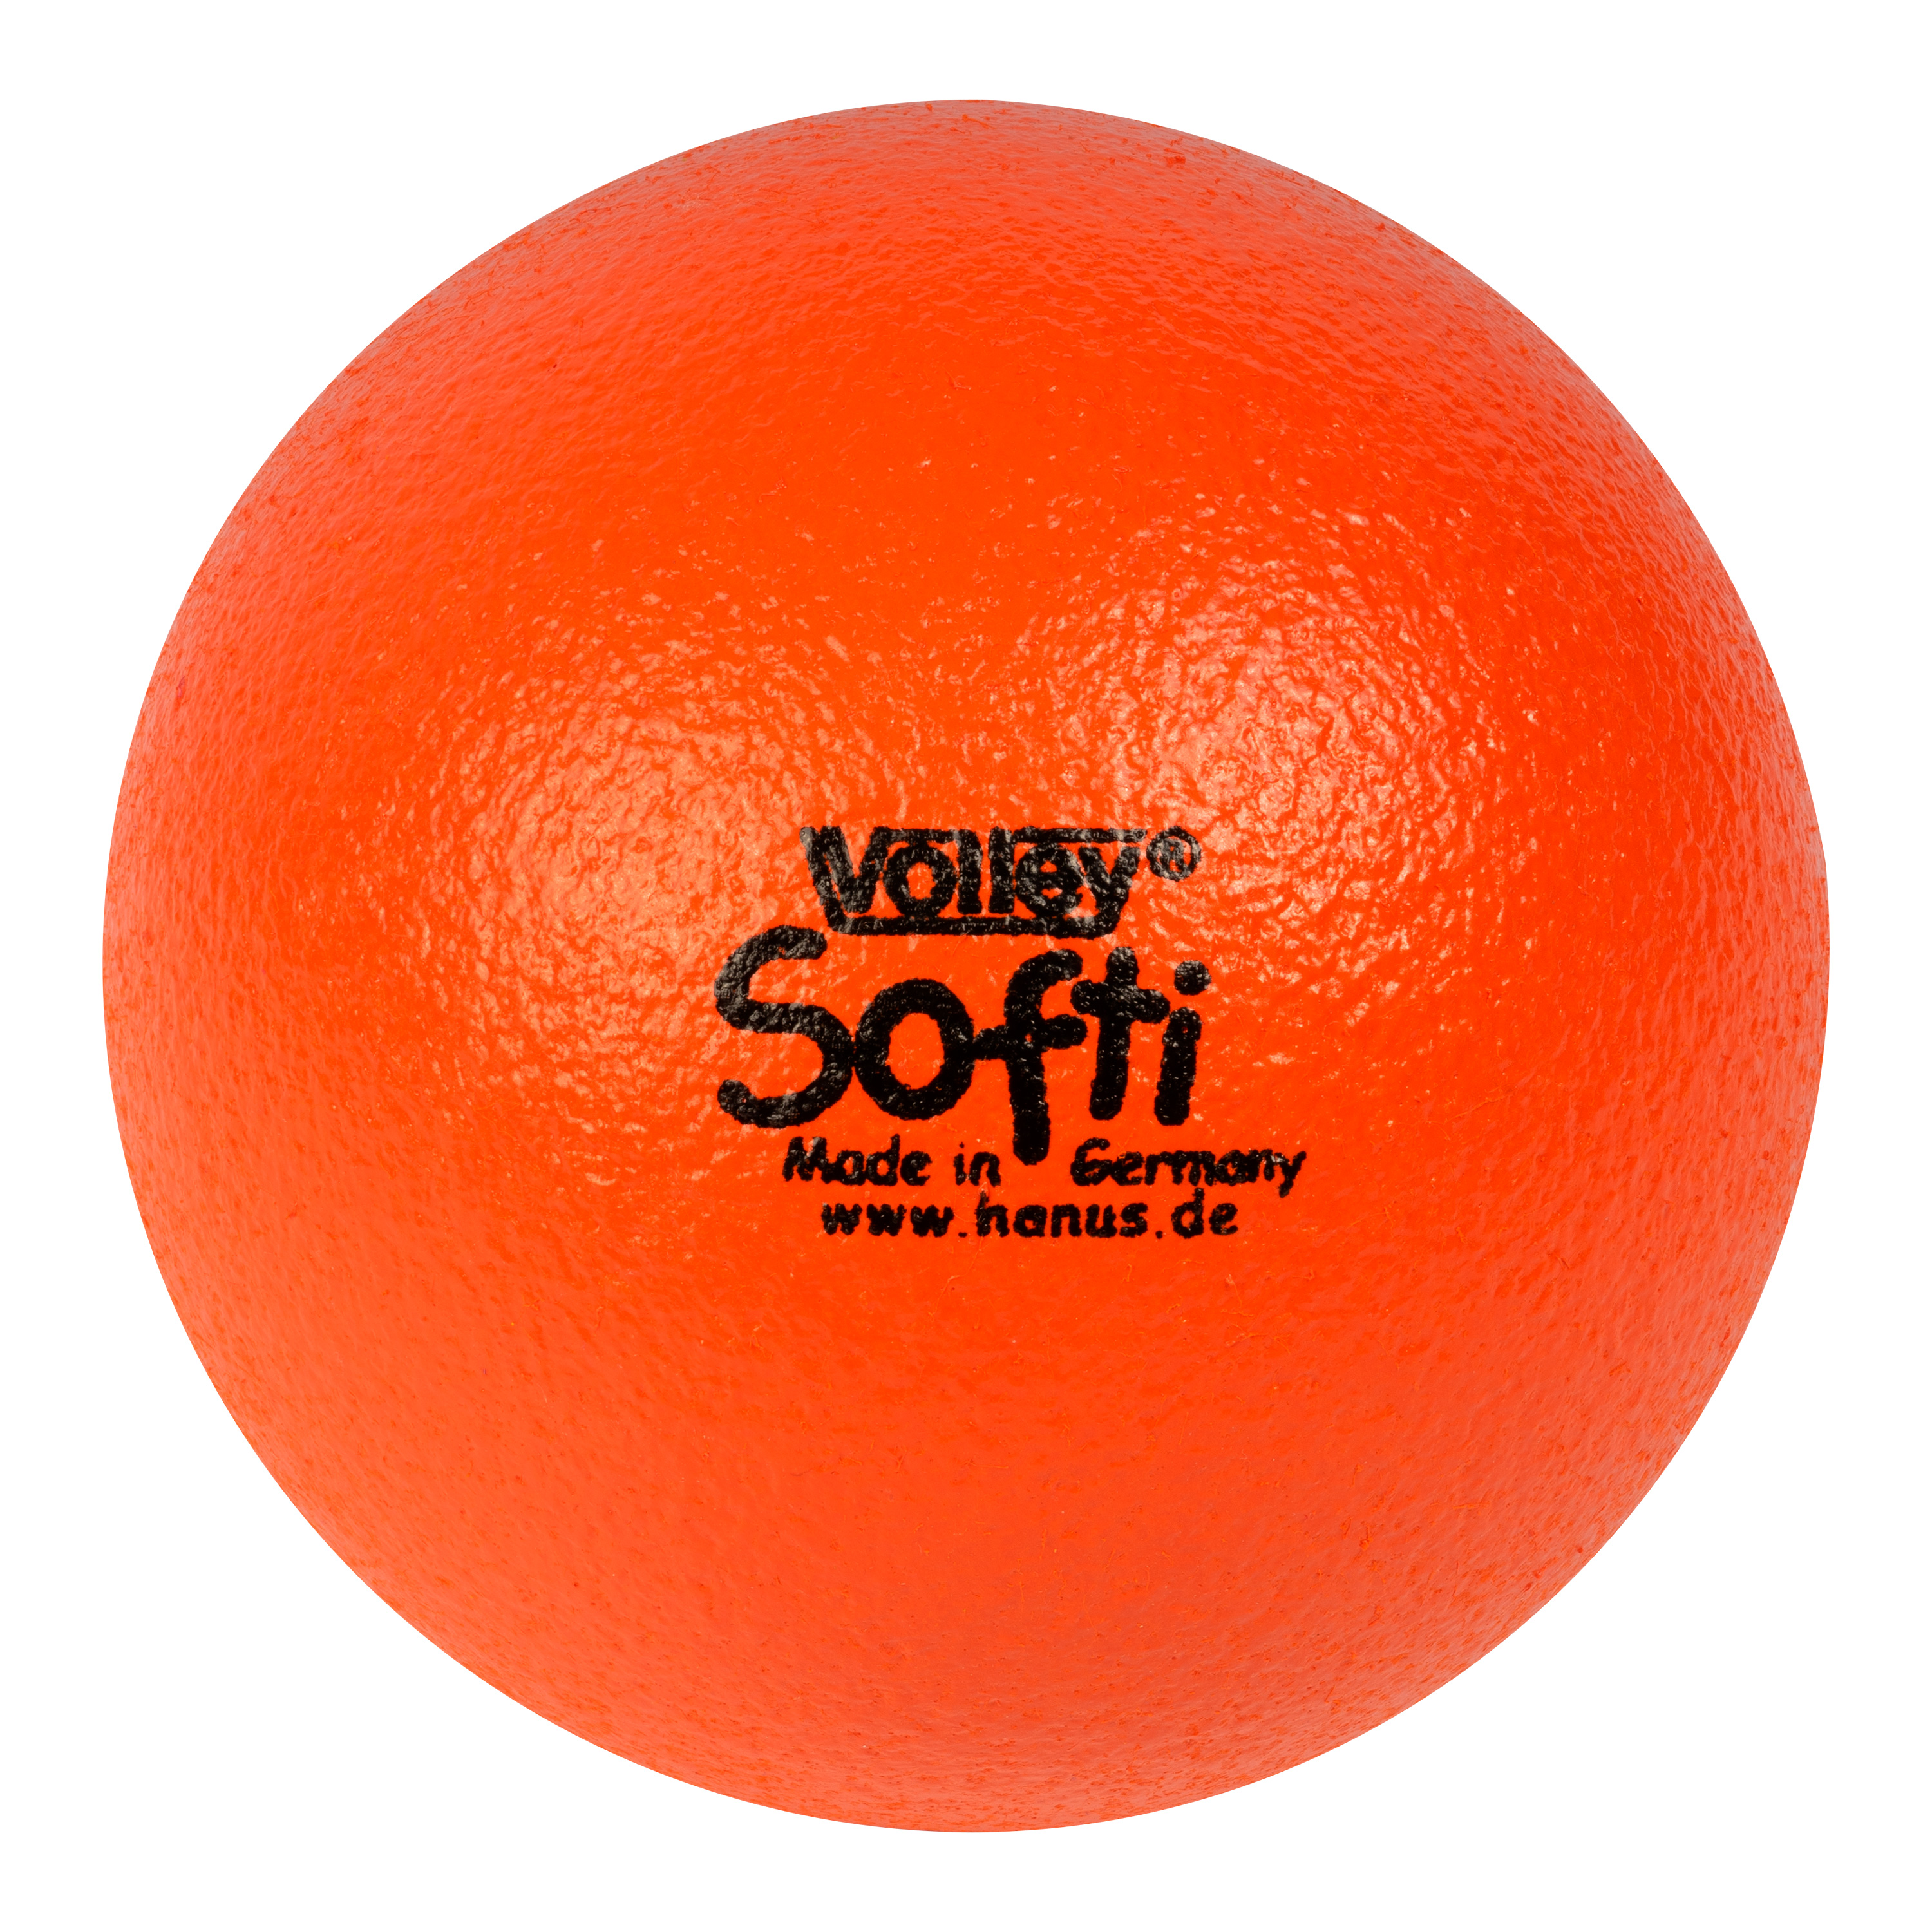 Multiball Volley 'Softi' mit Elefantenhaut Ø 16 cm